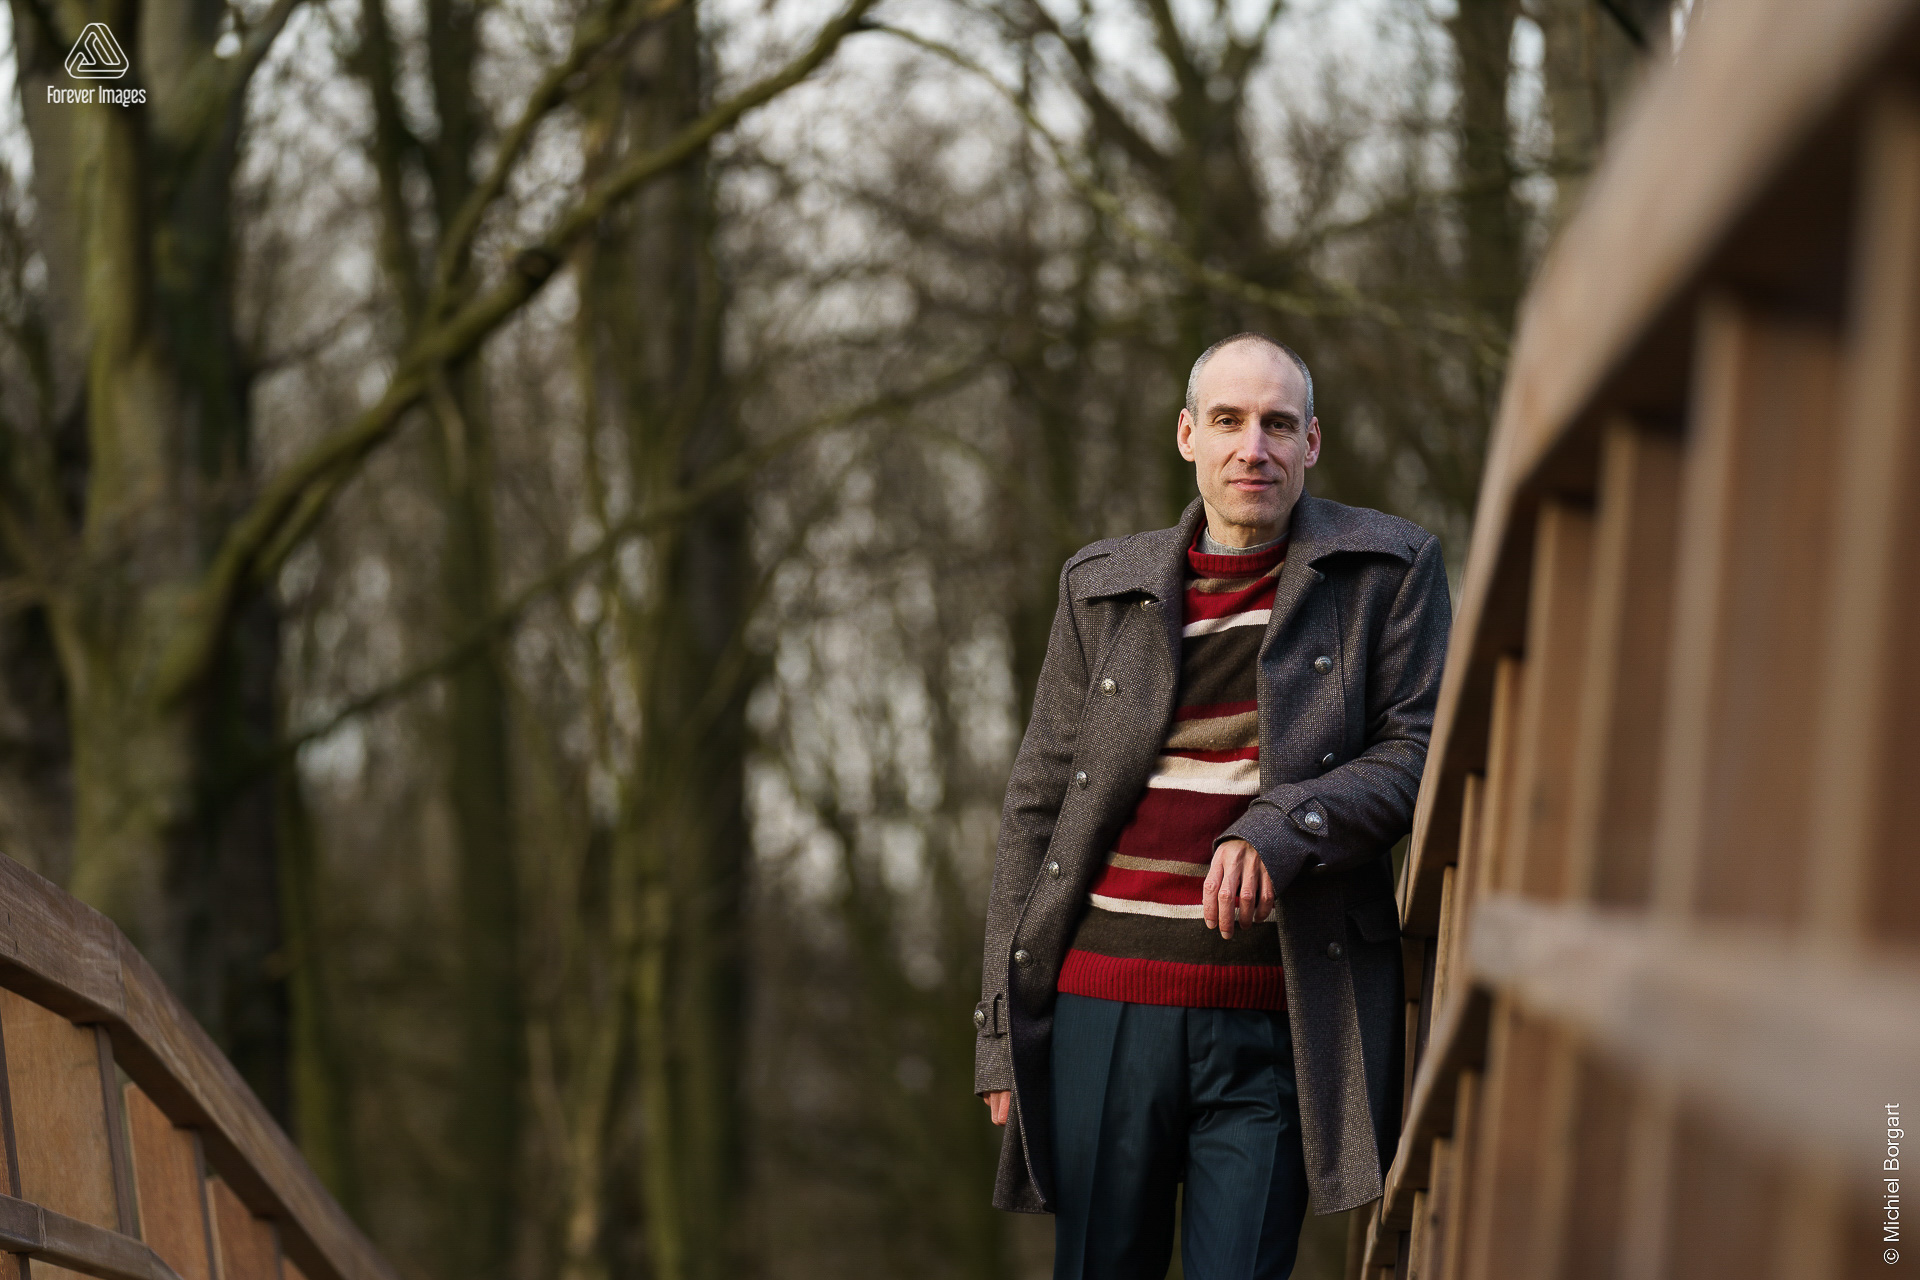 Portretfoto man op houten brug bij bos met glimlach | Robin Het Twiske De Stootersplas | Portretfotograaf Michiel Borgart - Forever Images.